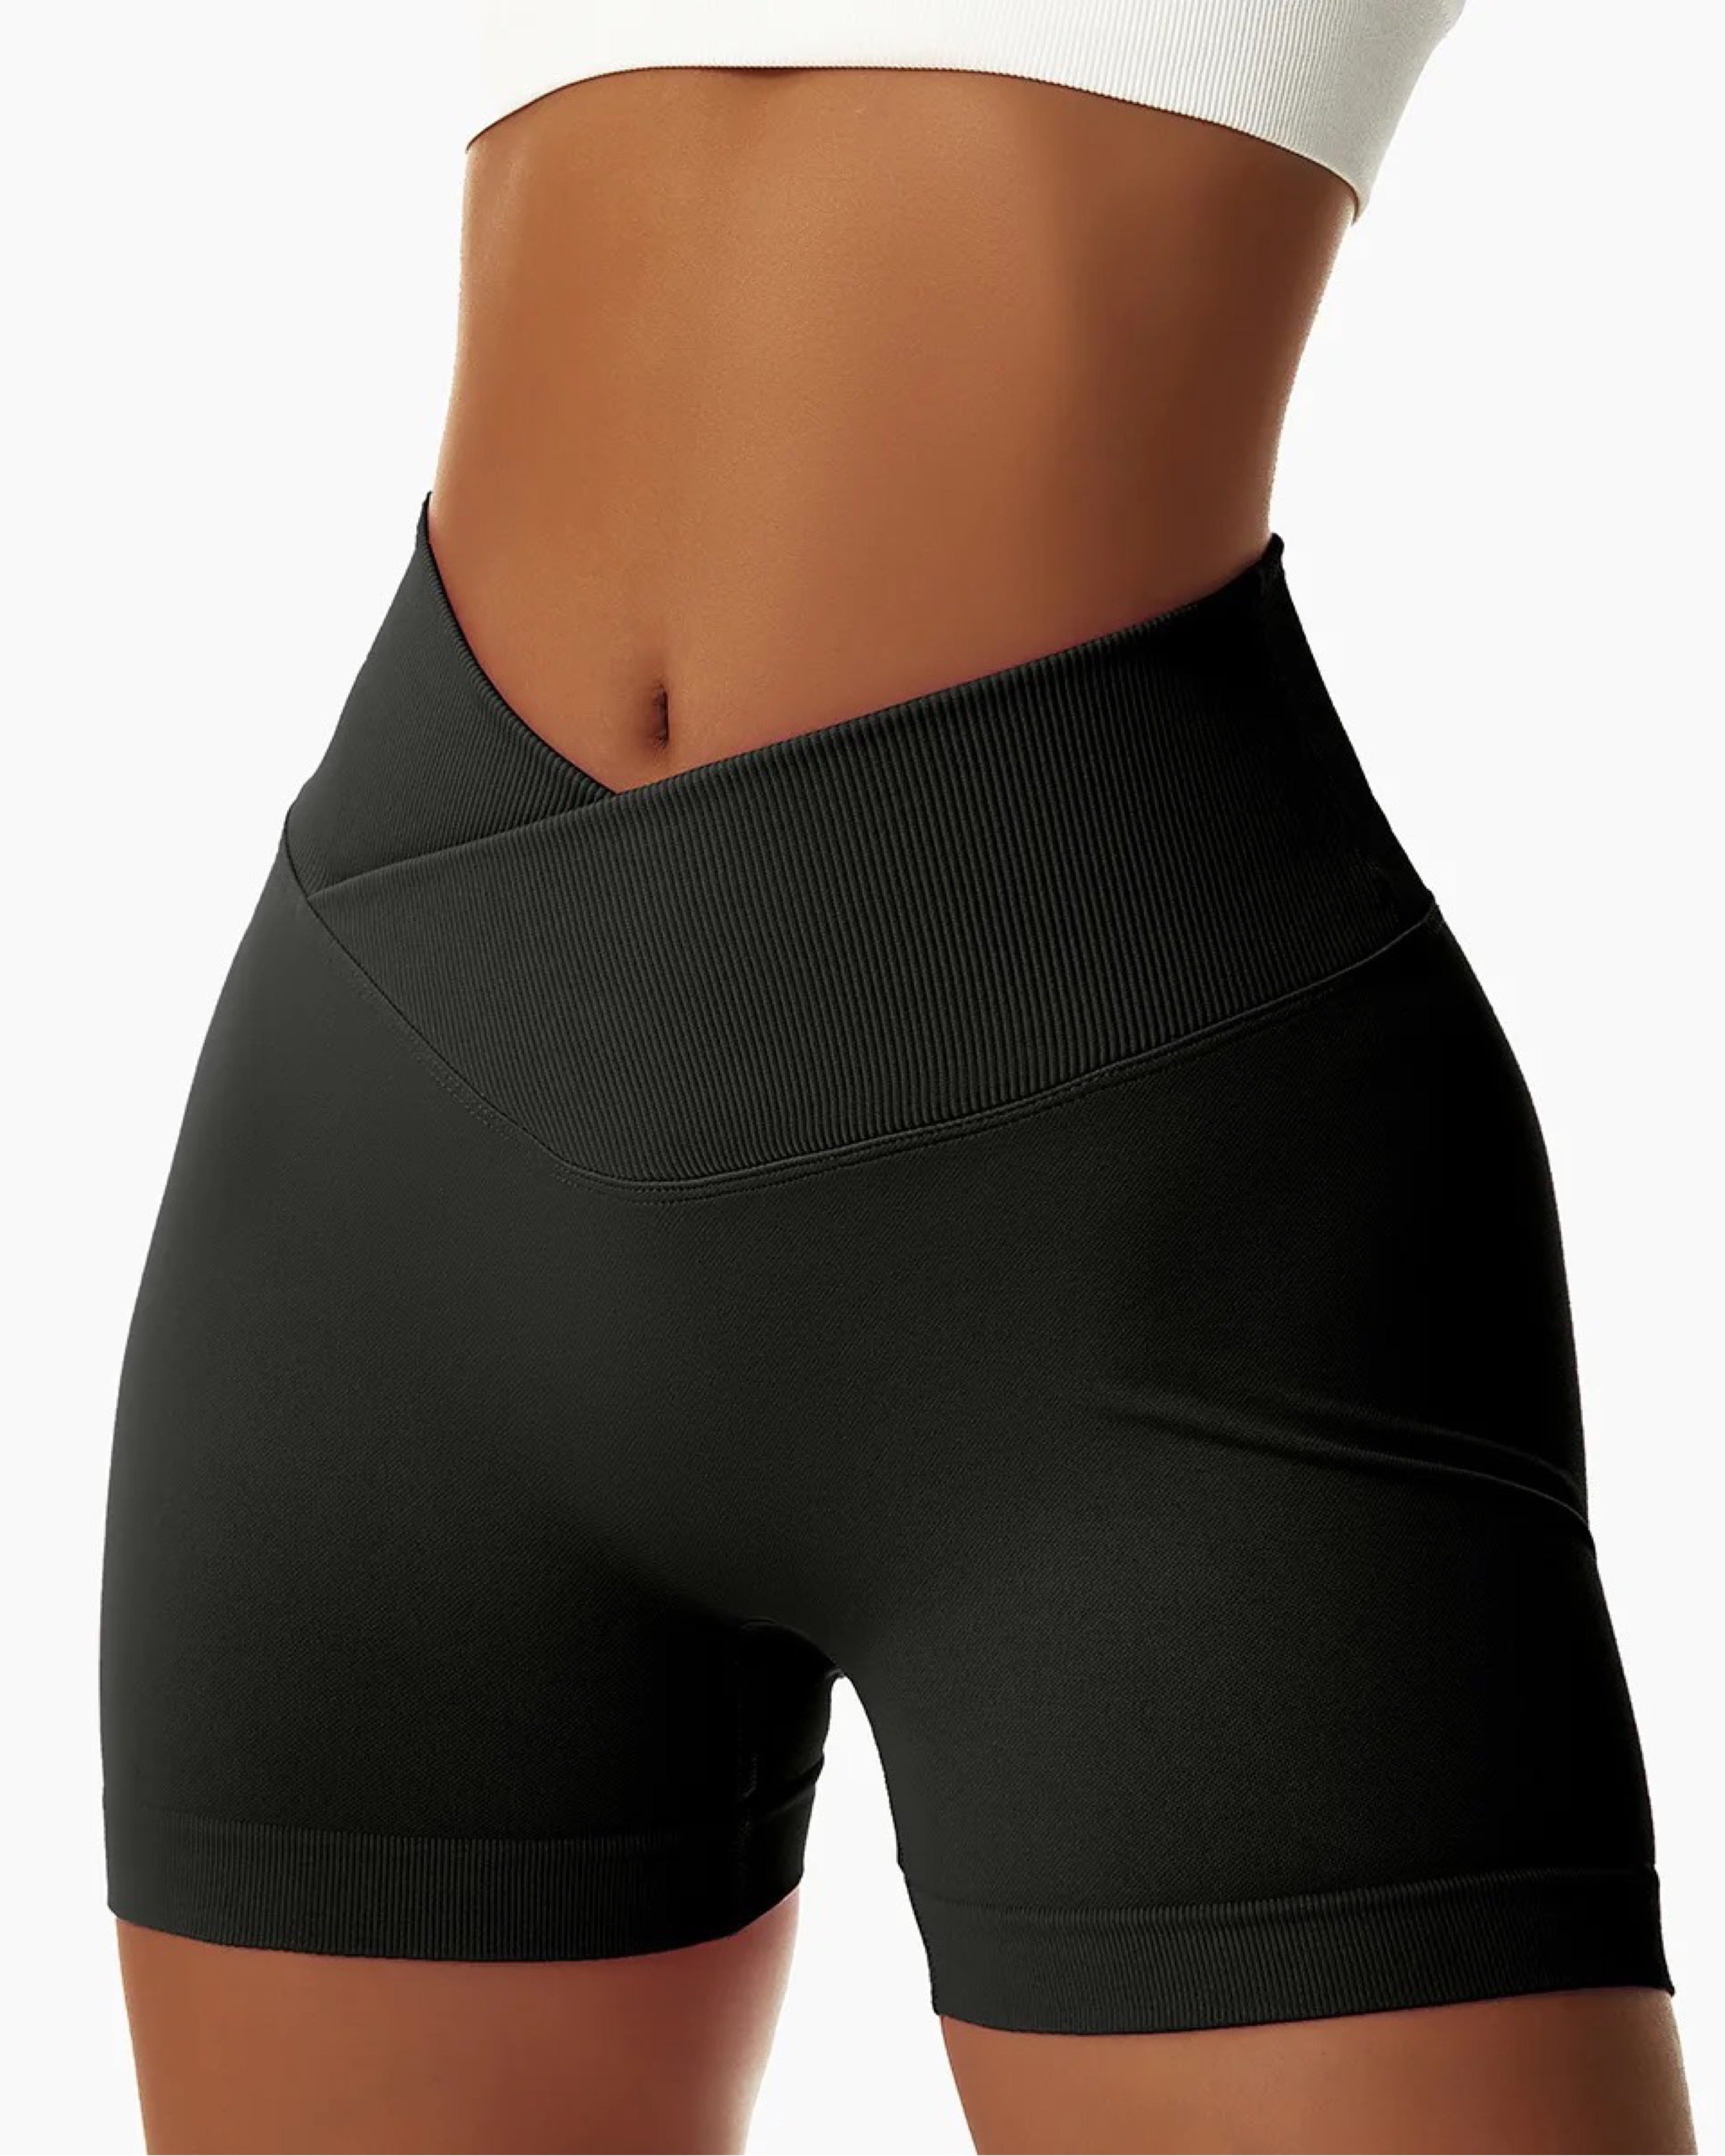 ZenCurve High-Waisted Scrunch Shorts Black - Medium / Black